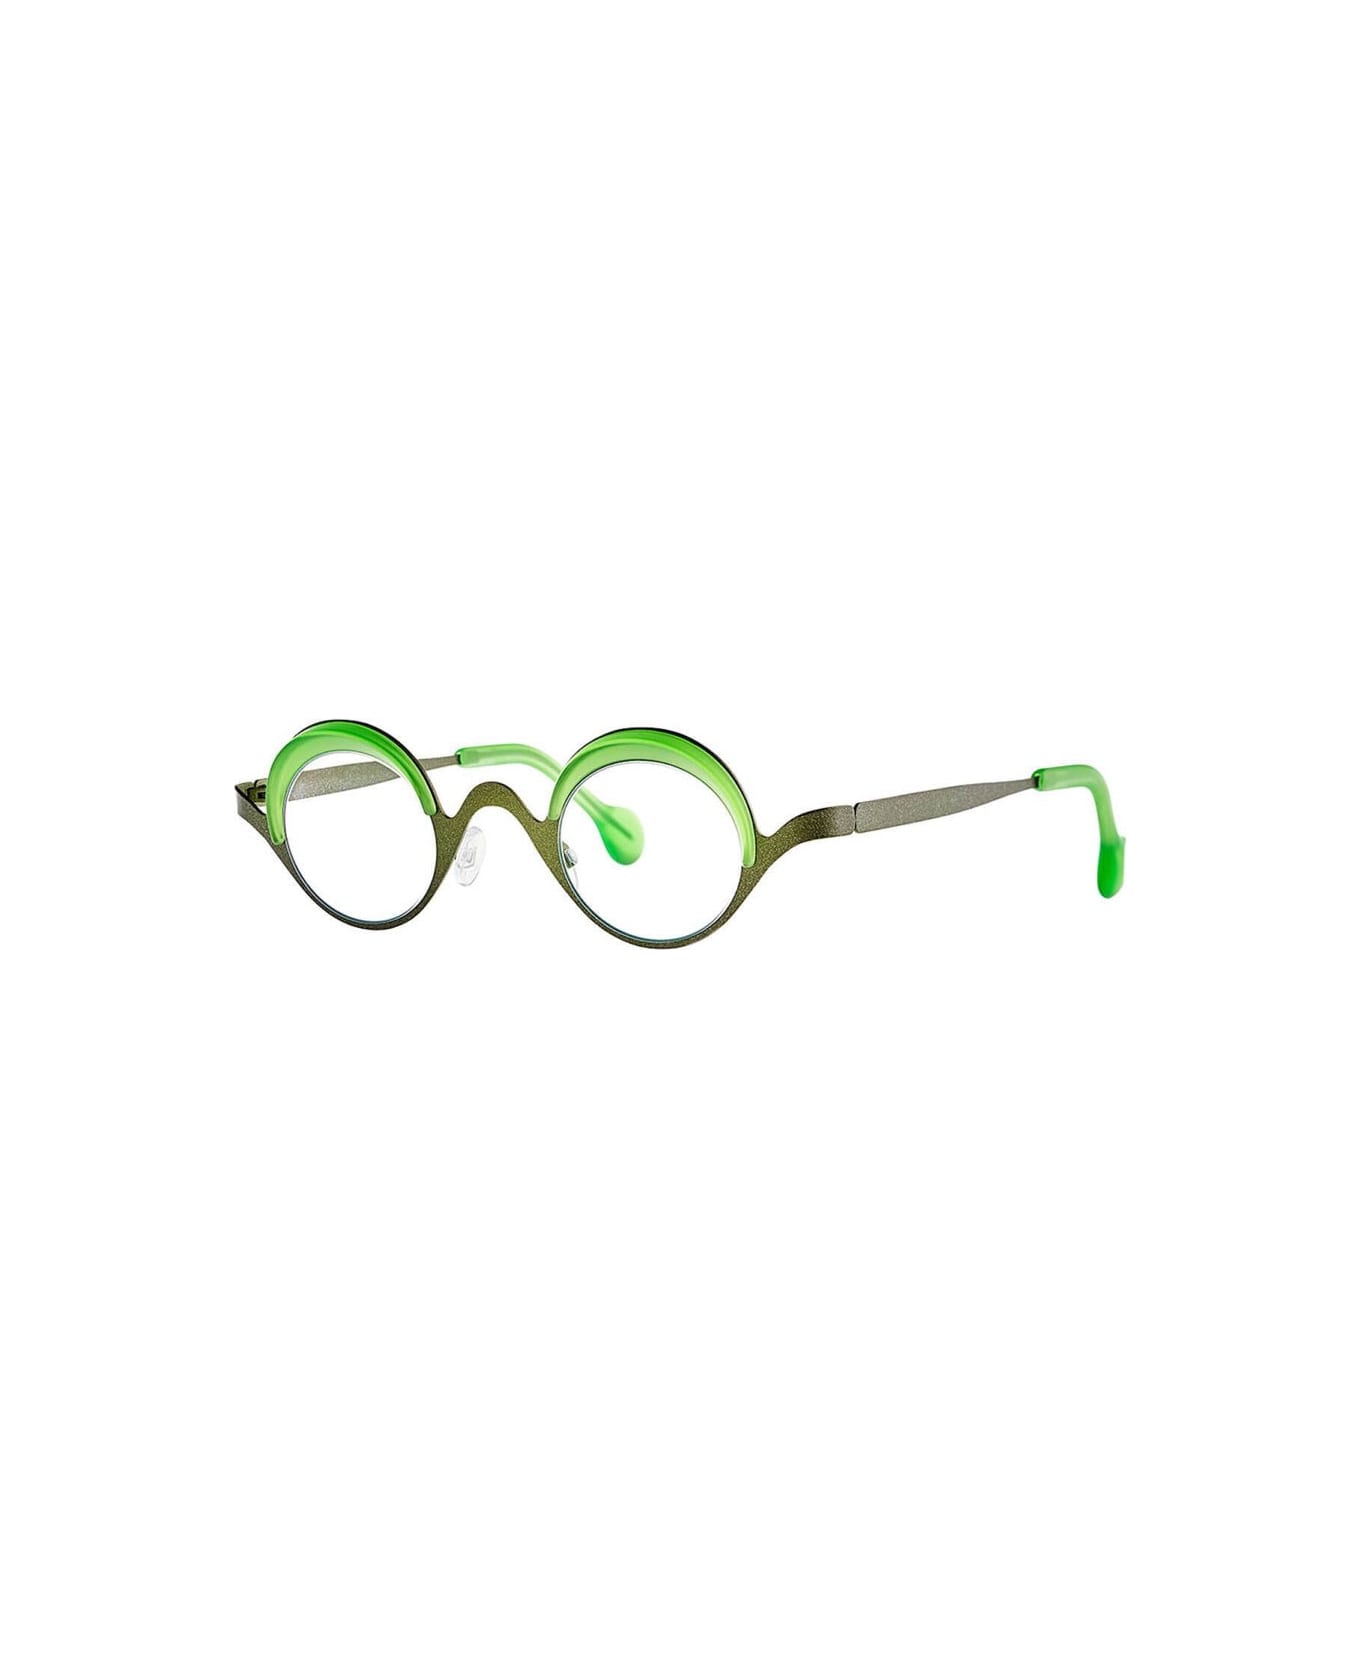 Theo Eyewear Calli 7184 Glasses - Olive/Green アイウェア